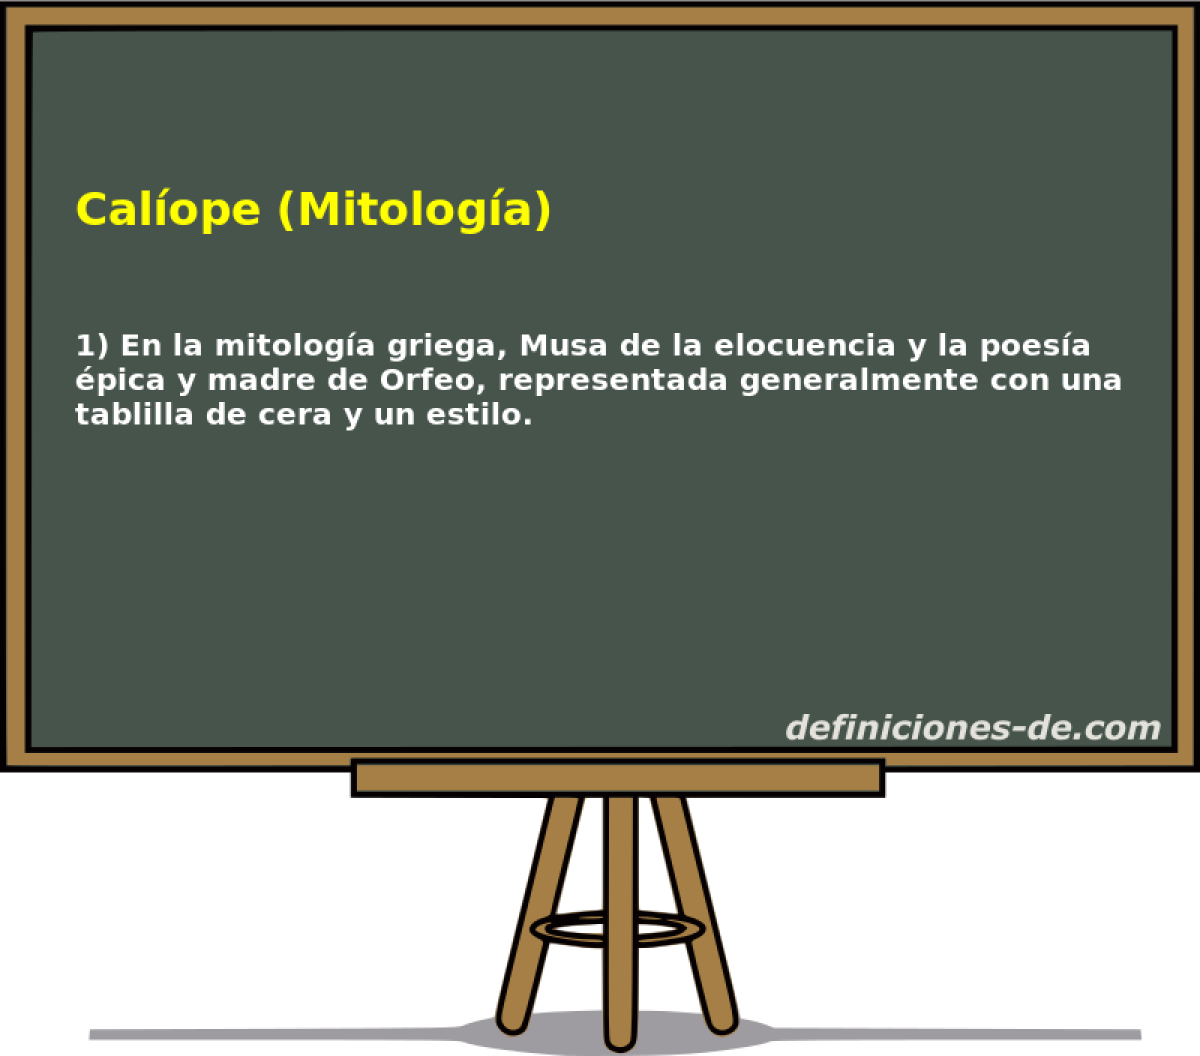 Calope (Mitologa) 